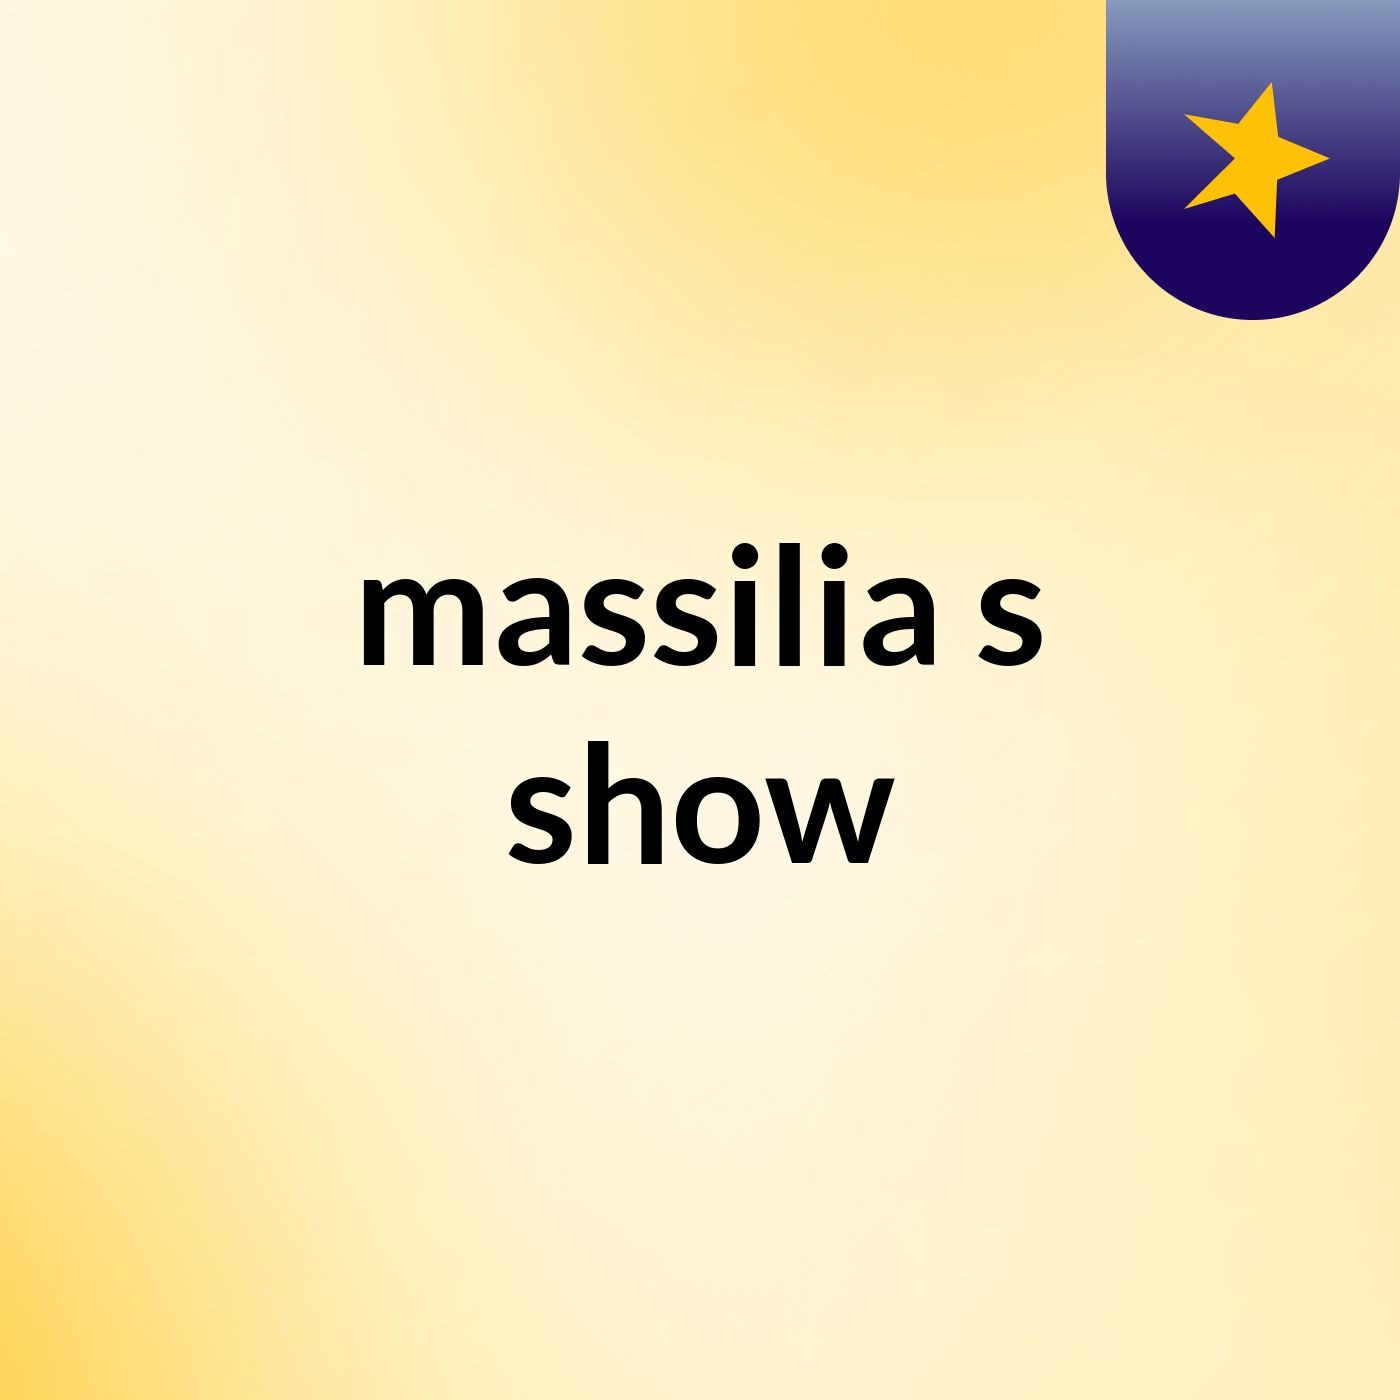 massilia's show